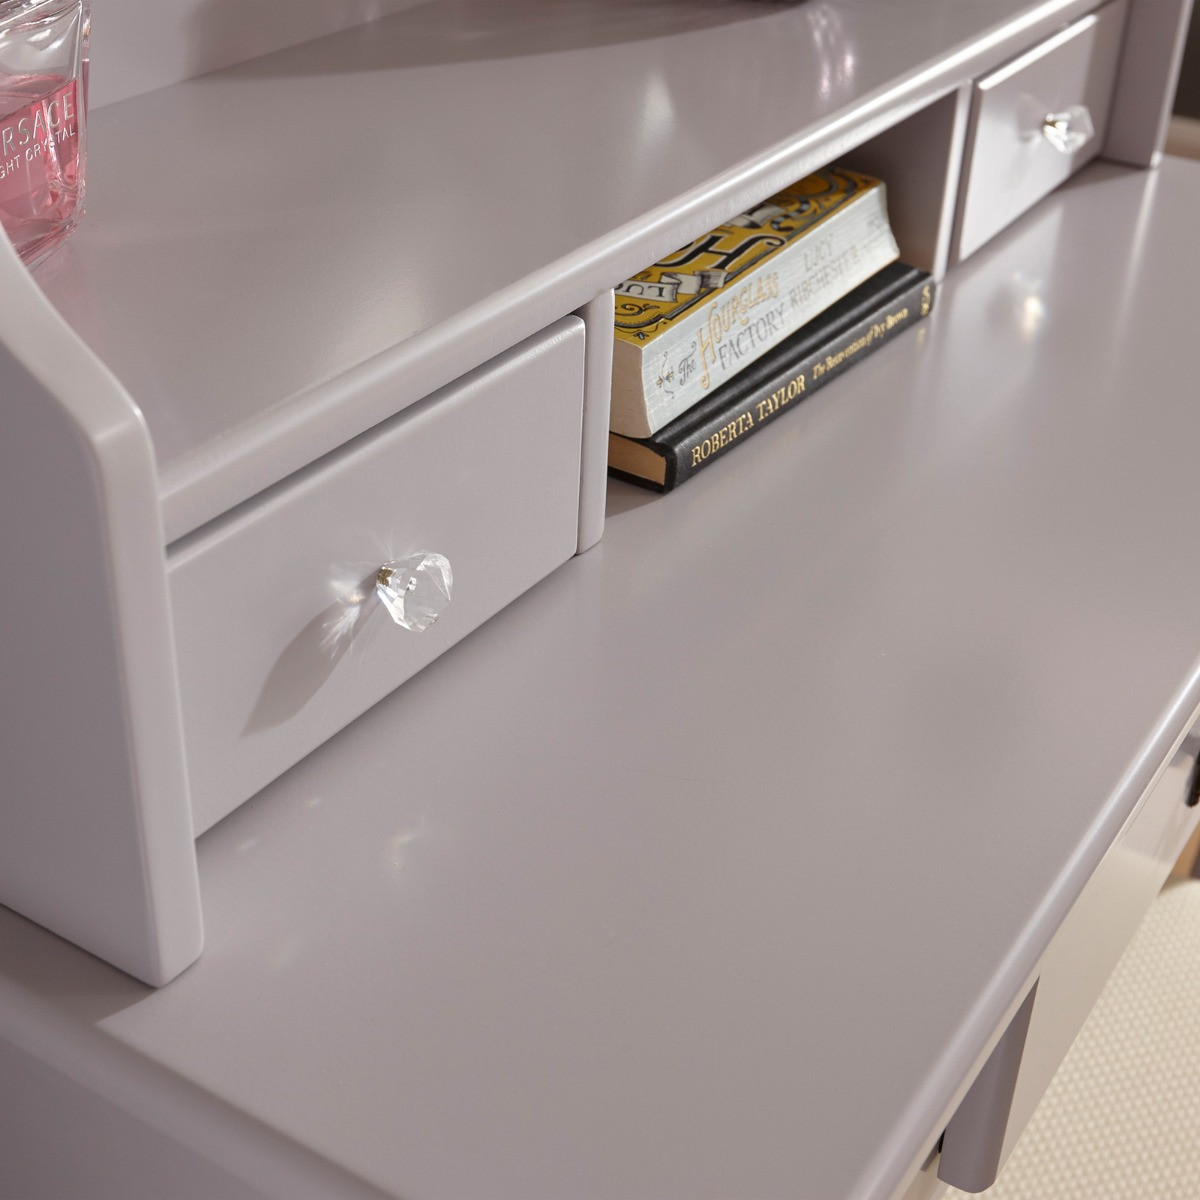 Lumberton Dresser with Stool - Grey>